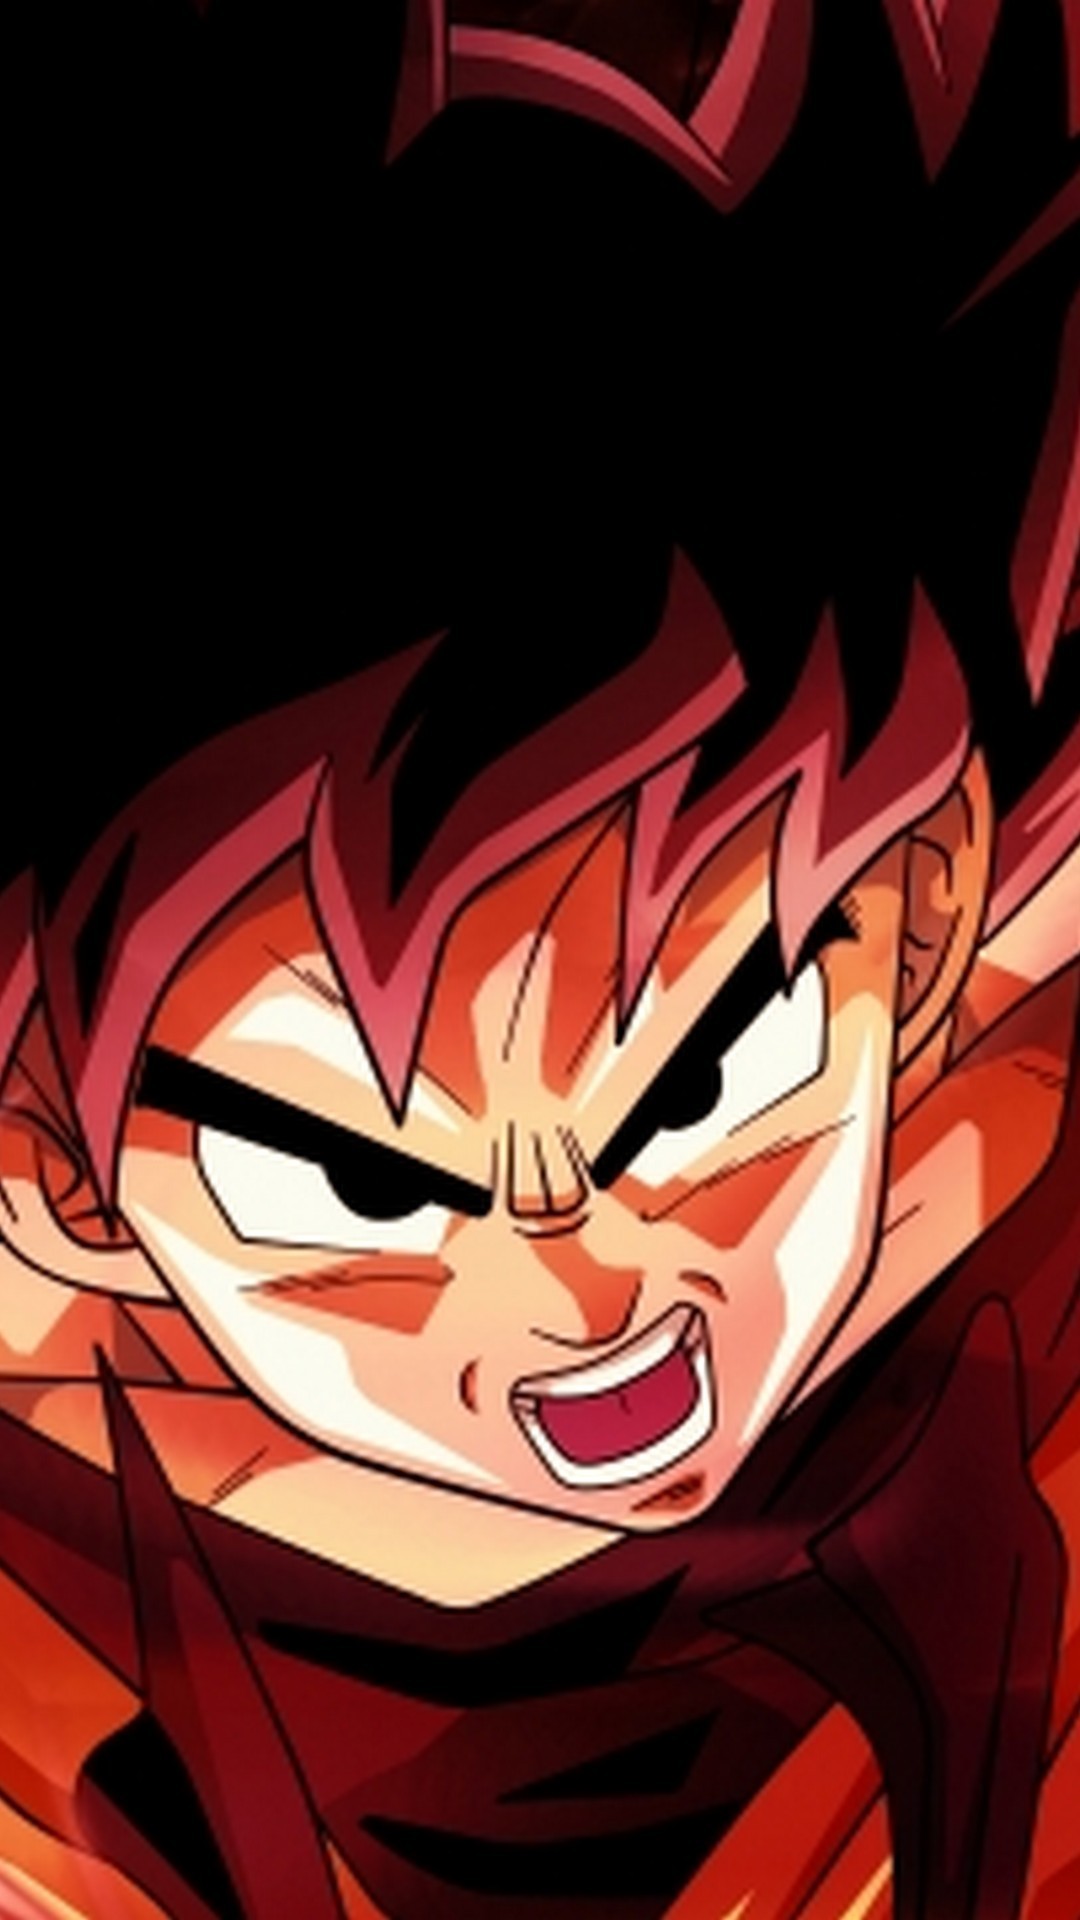 Goku Super Saiyan God Android Wallpaper with HD resolution 1080x1920